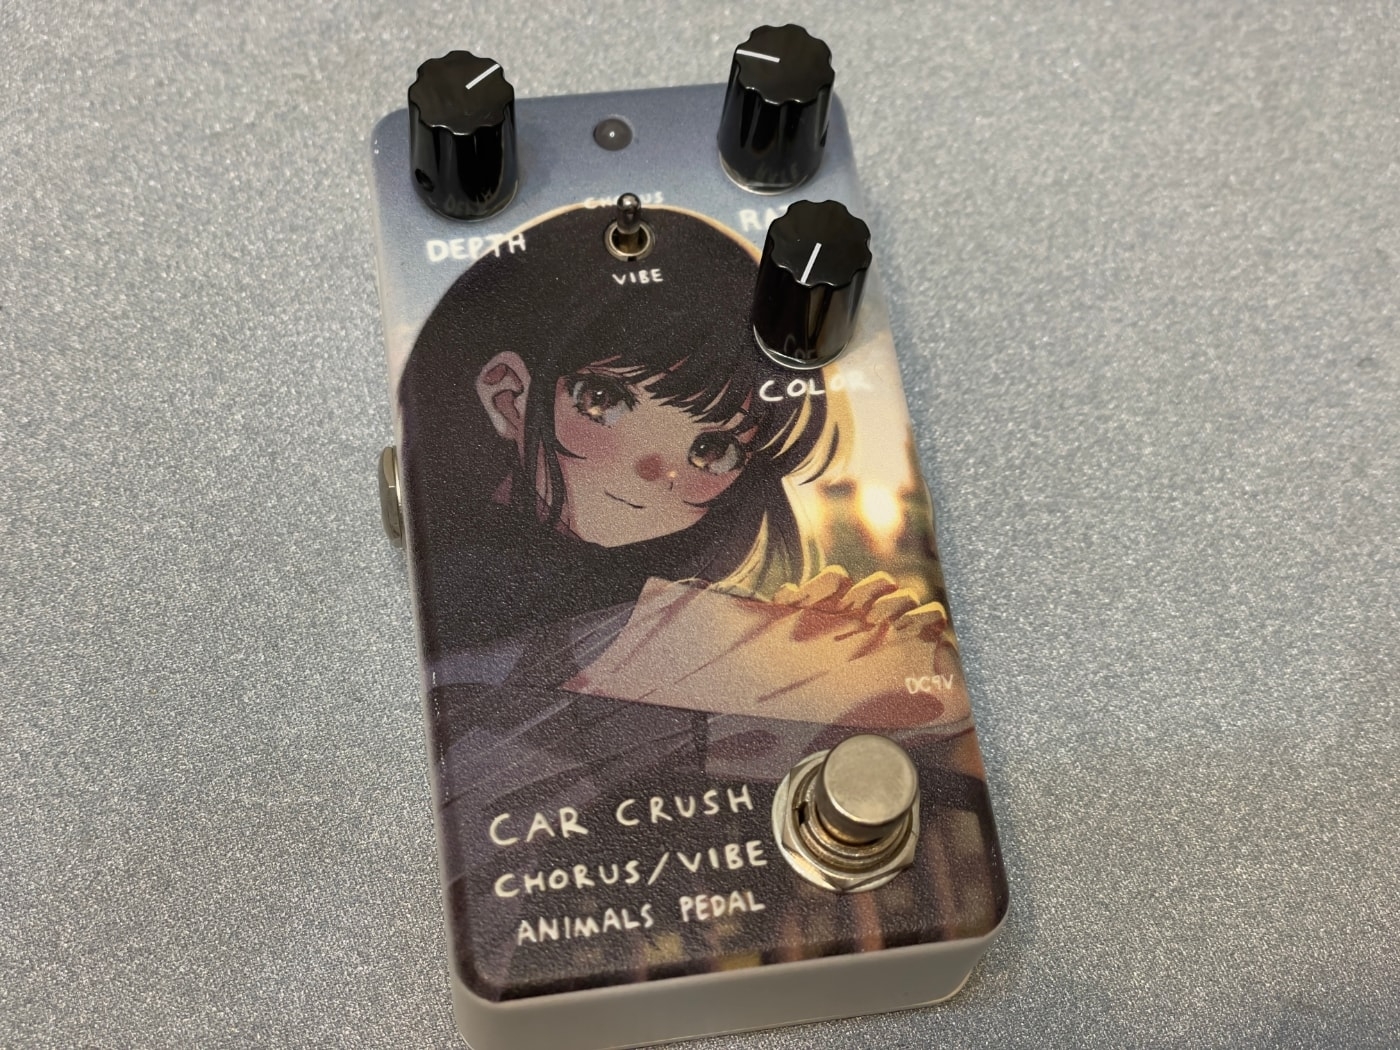 Animals Pedal Custom Illustrated Car Crush Chorus/Vibe by hmng 光の匂い